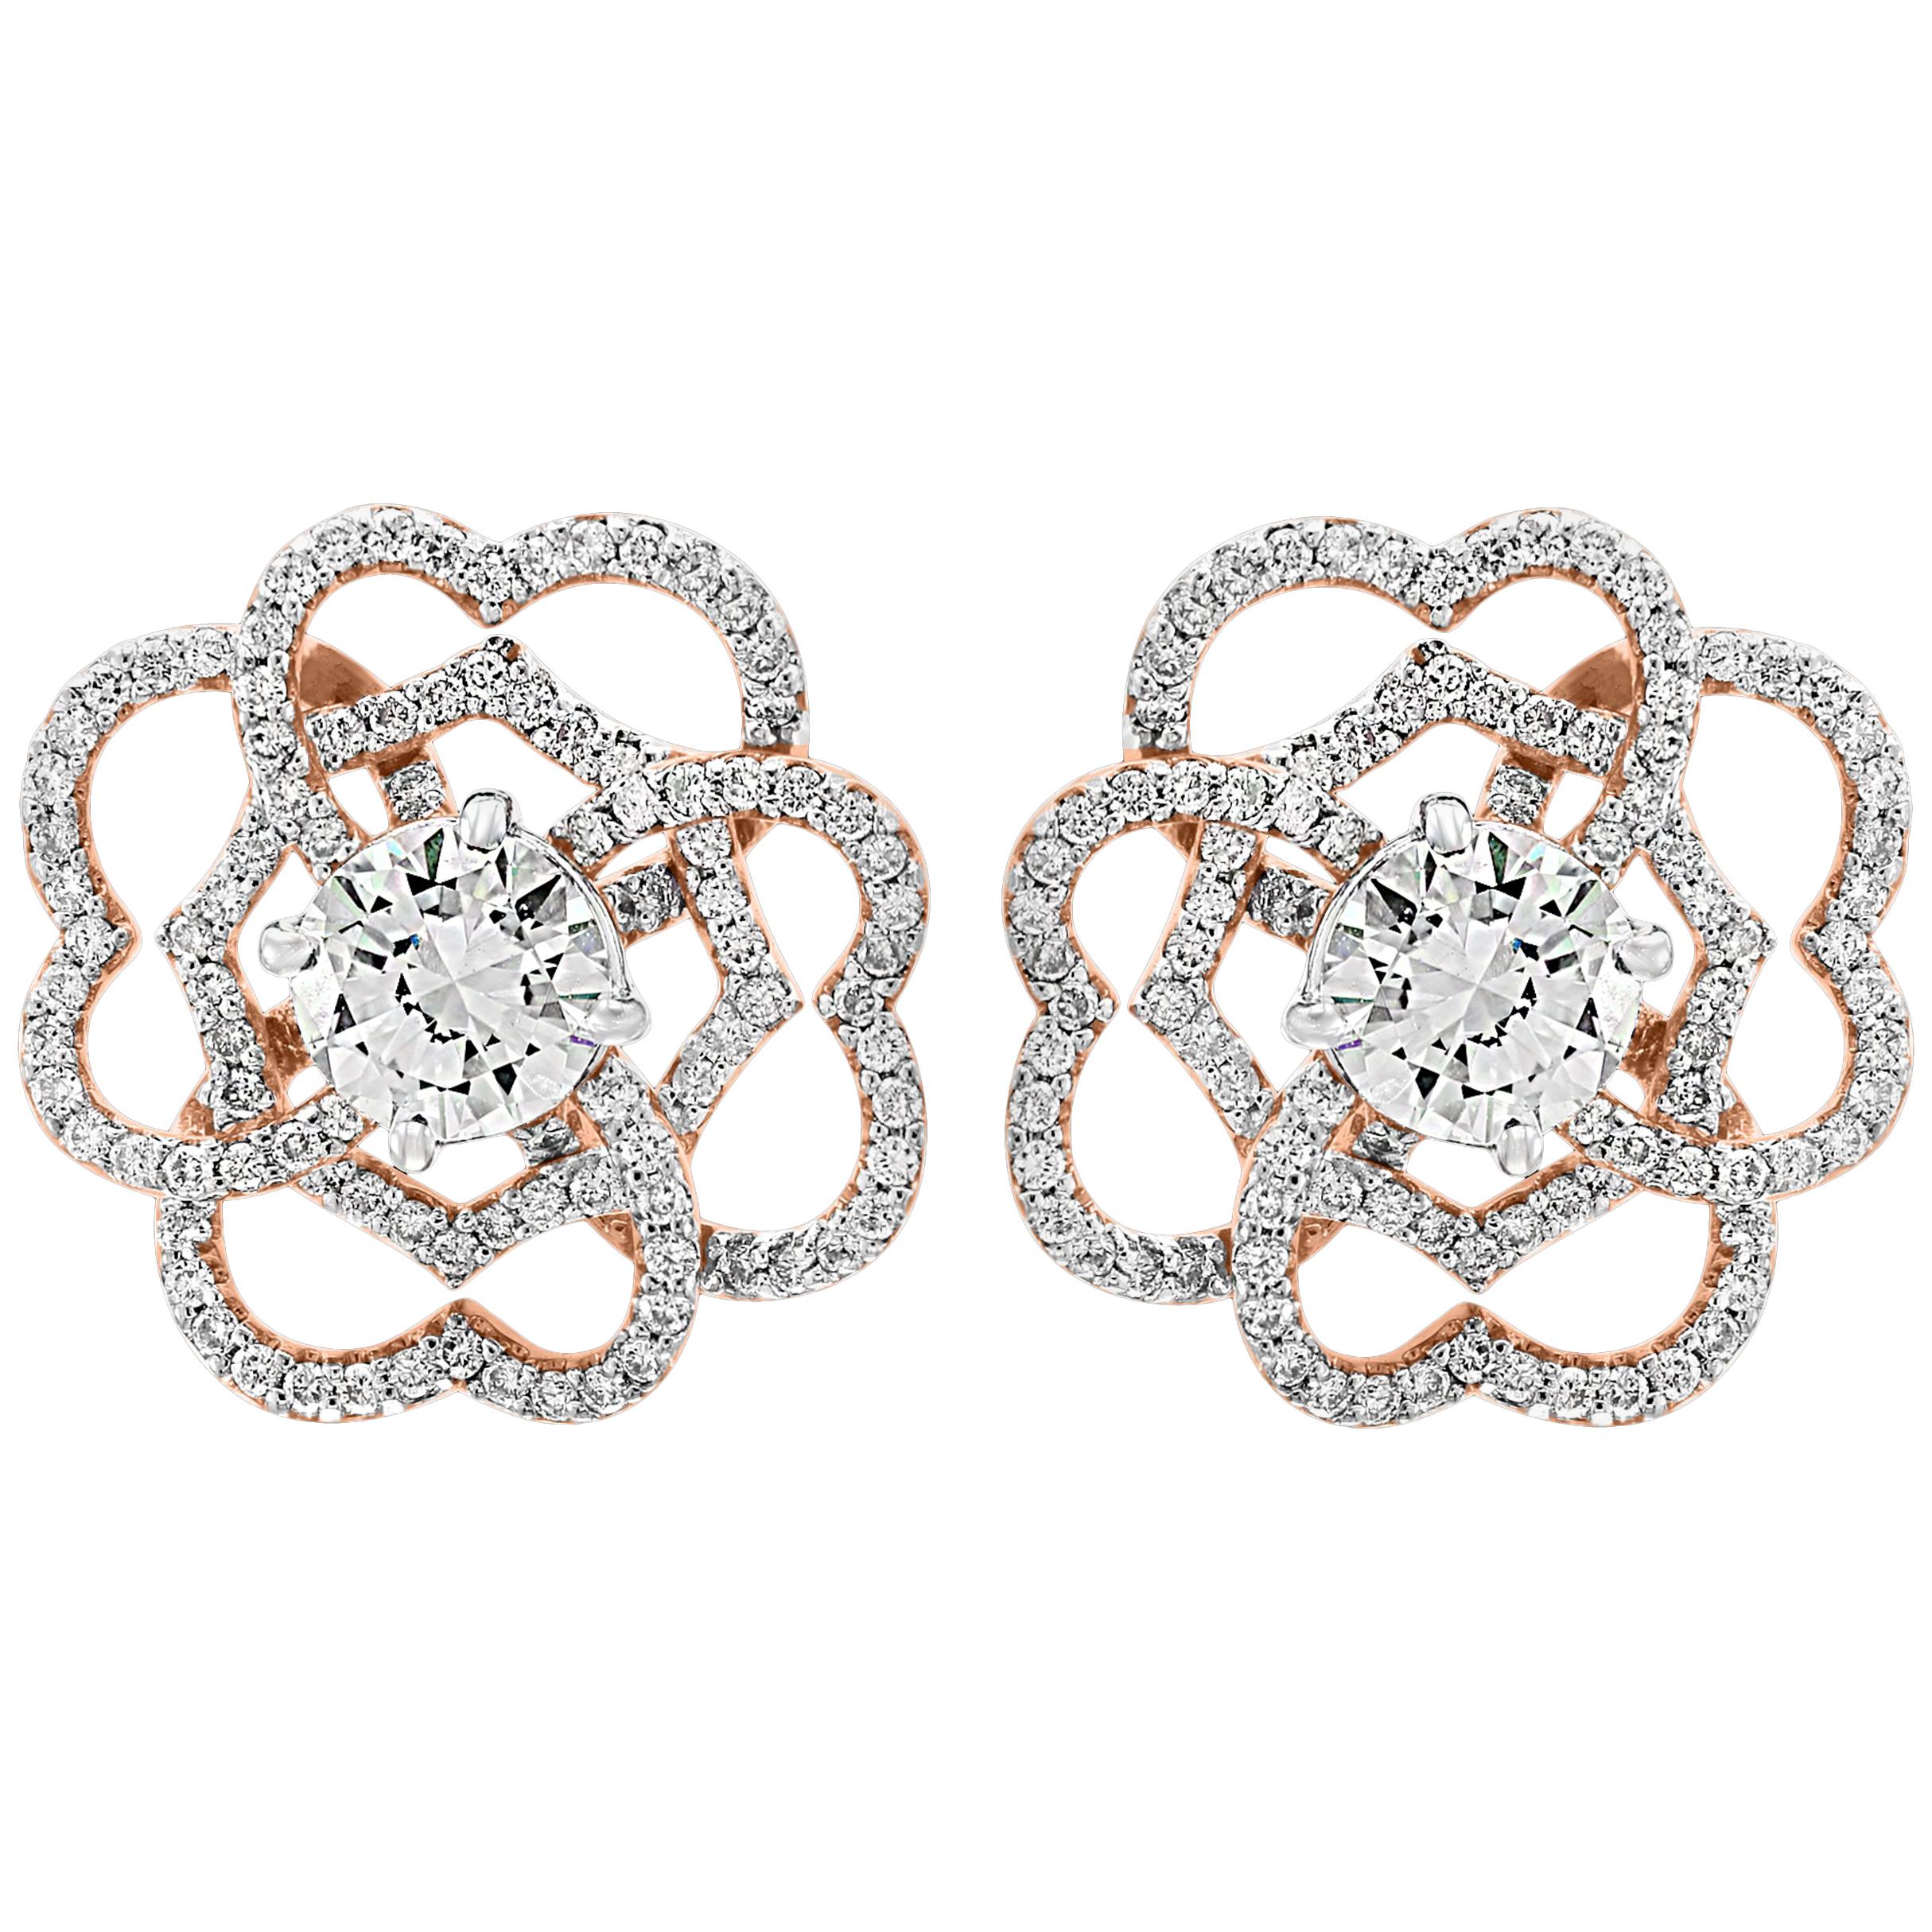 1 Carat Each Solitaire Centre Diamond Flower/Cluster Earring 14 Karat Rose Gold For Sale